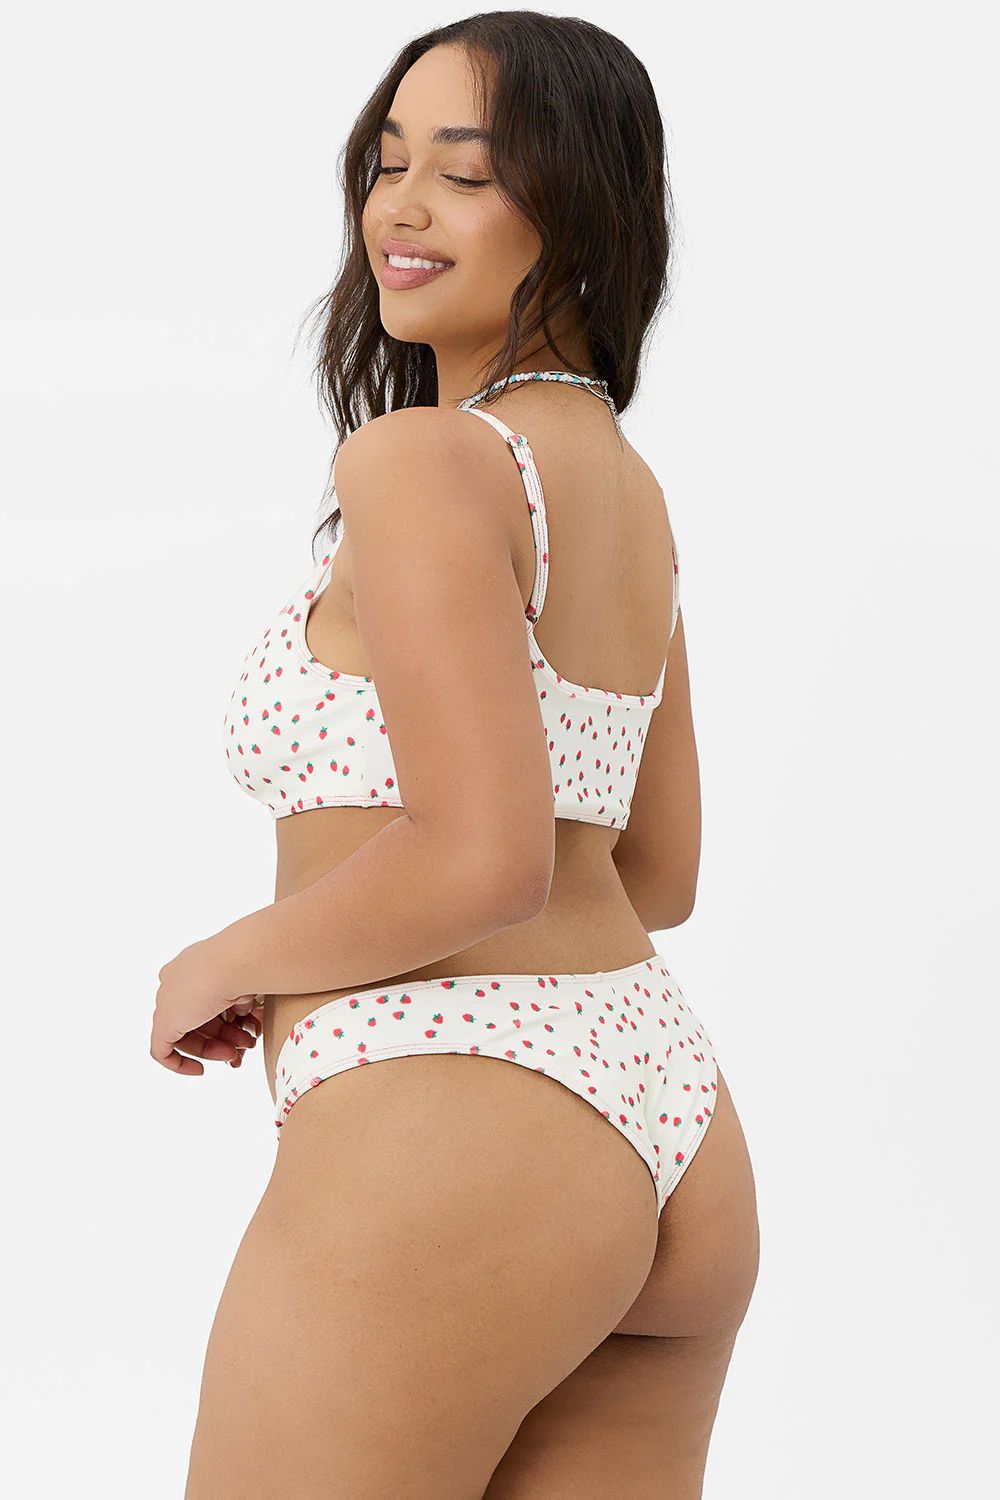 Katarina Terry Cheeky Bikini Bottom - Strawberry Cream | Frankies Bikinis